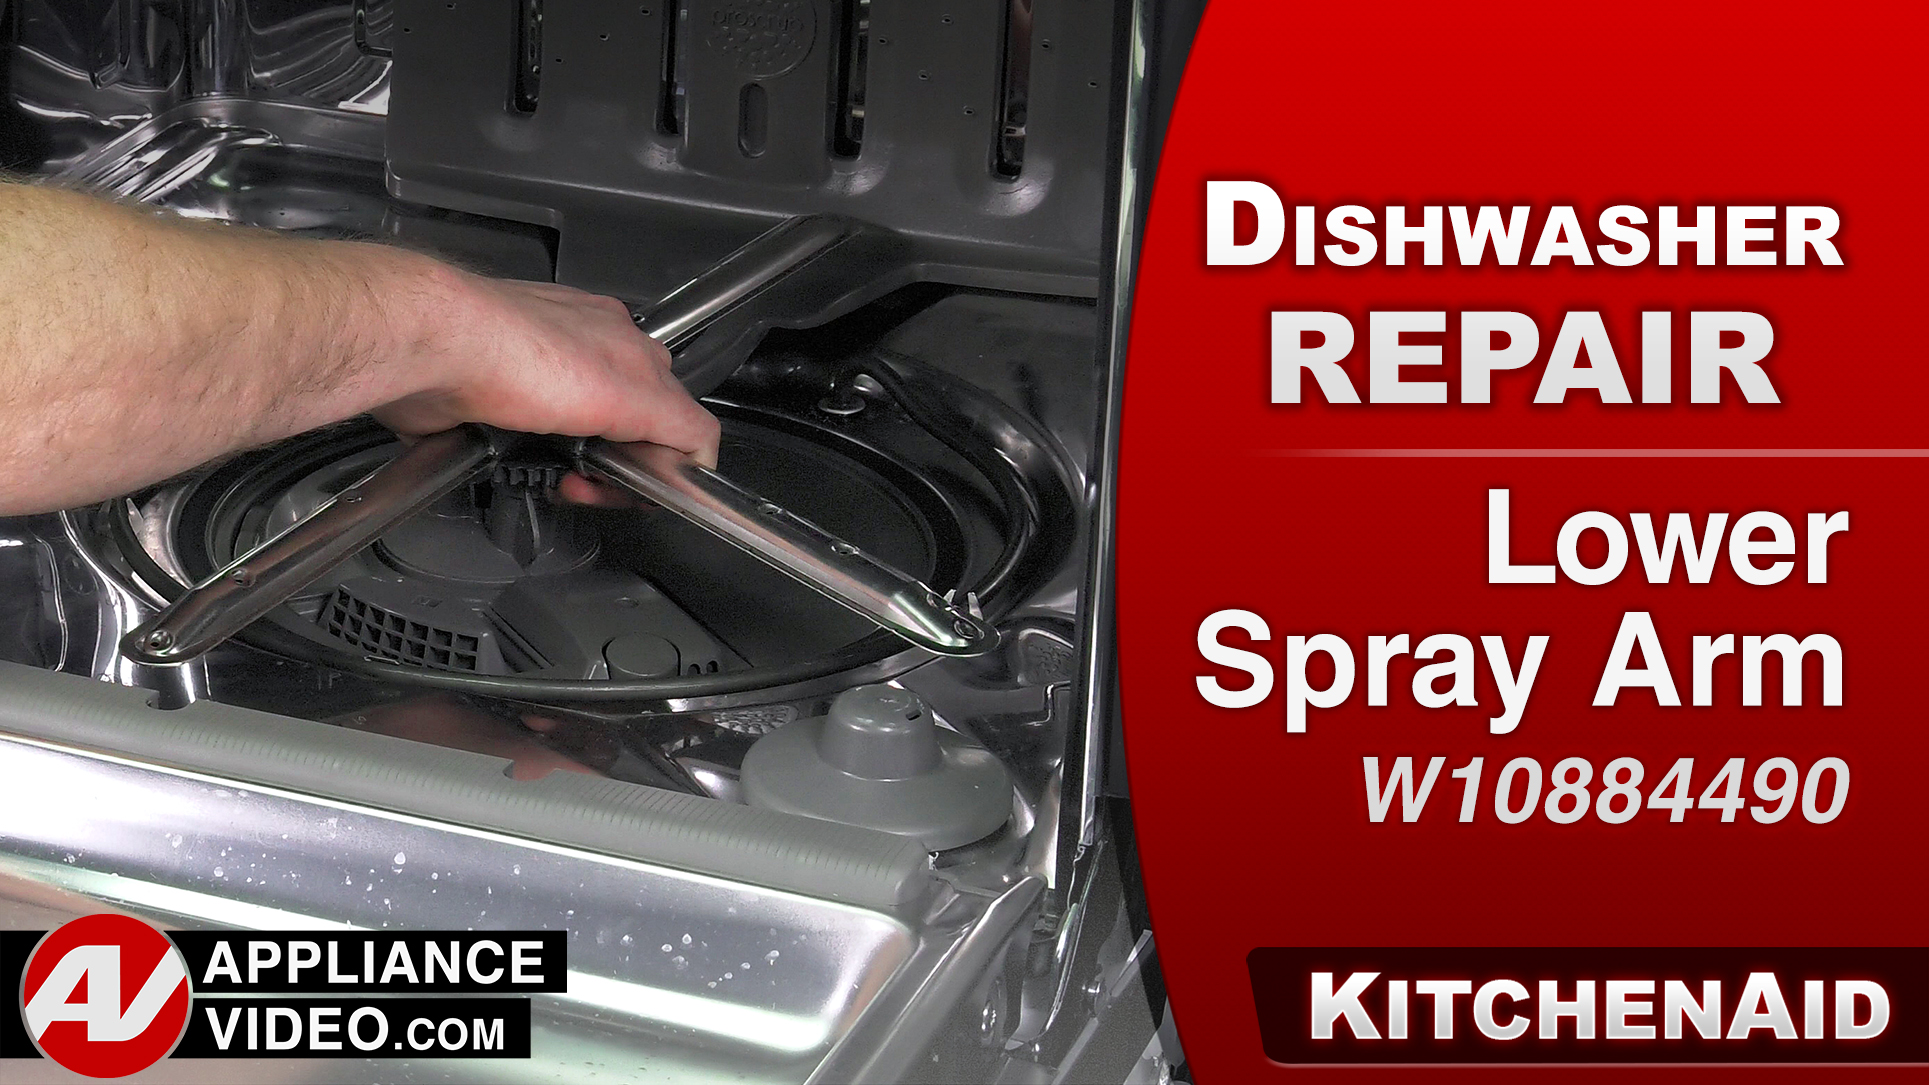 KitchenAid KDTM354ESS3 Dishwasher – Poor cleaning – Lower Spray Arm